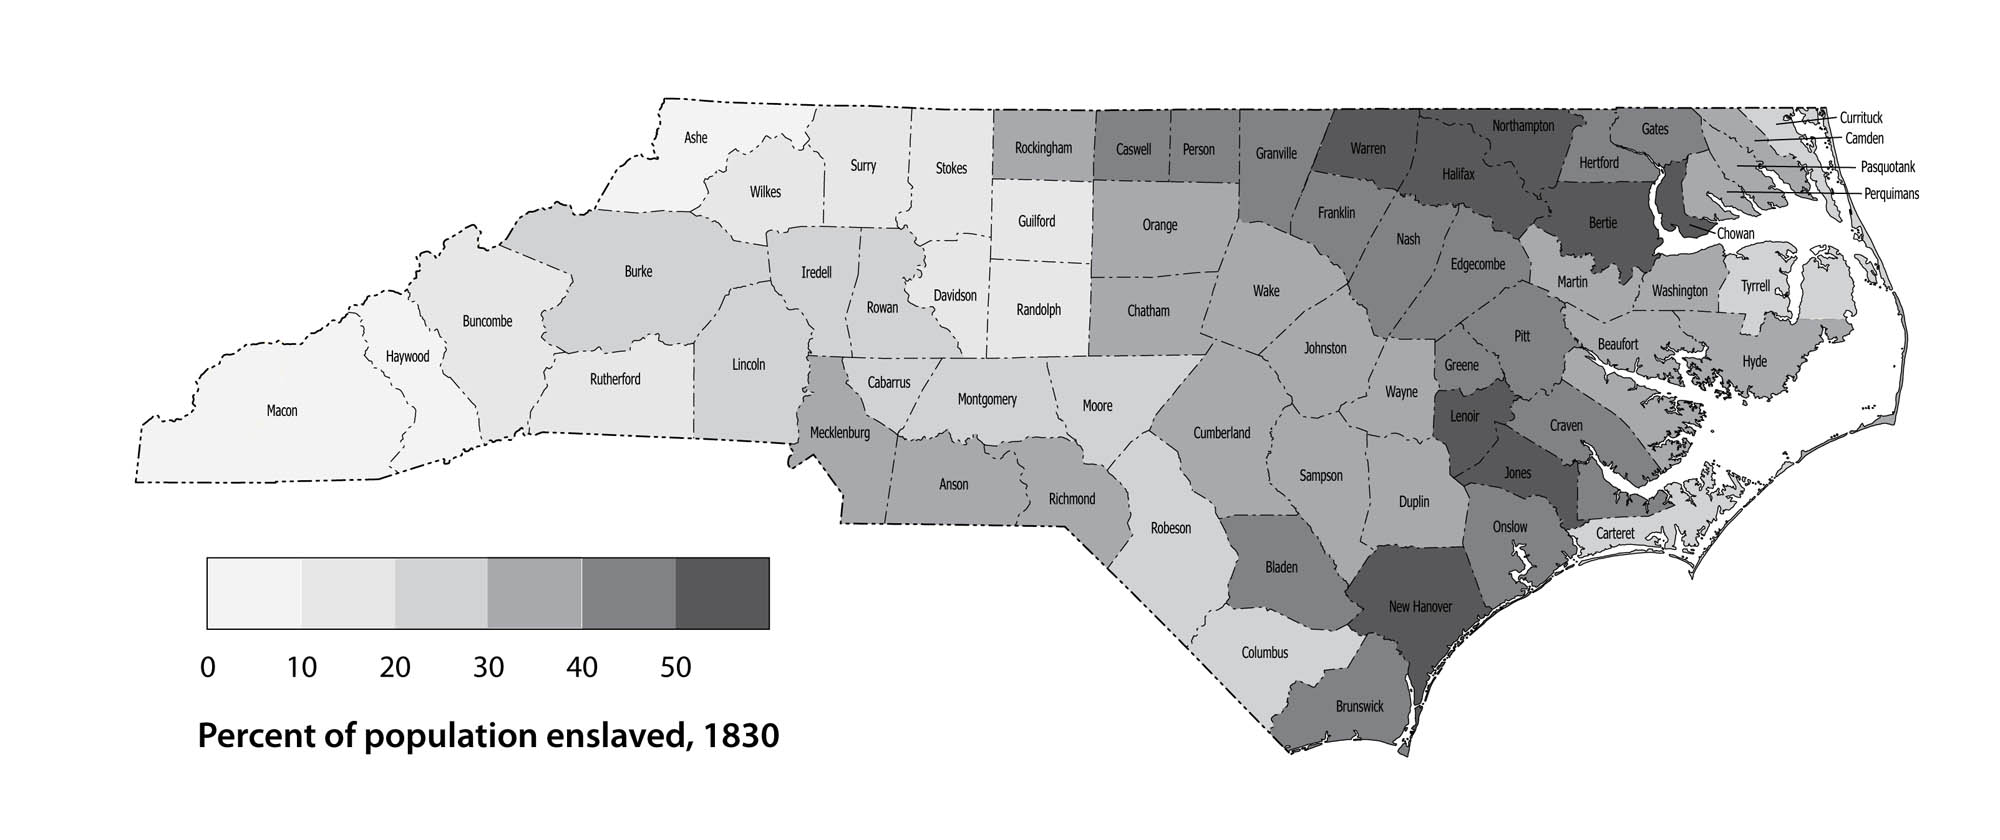 North Carolina population: Percent enslaved by county, 1830